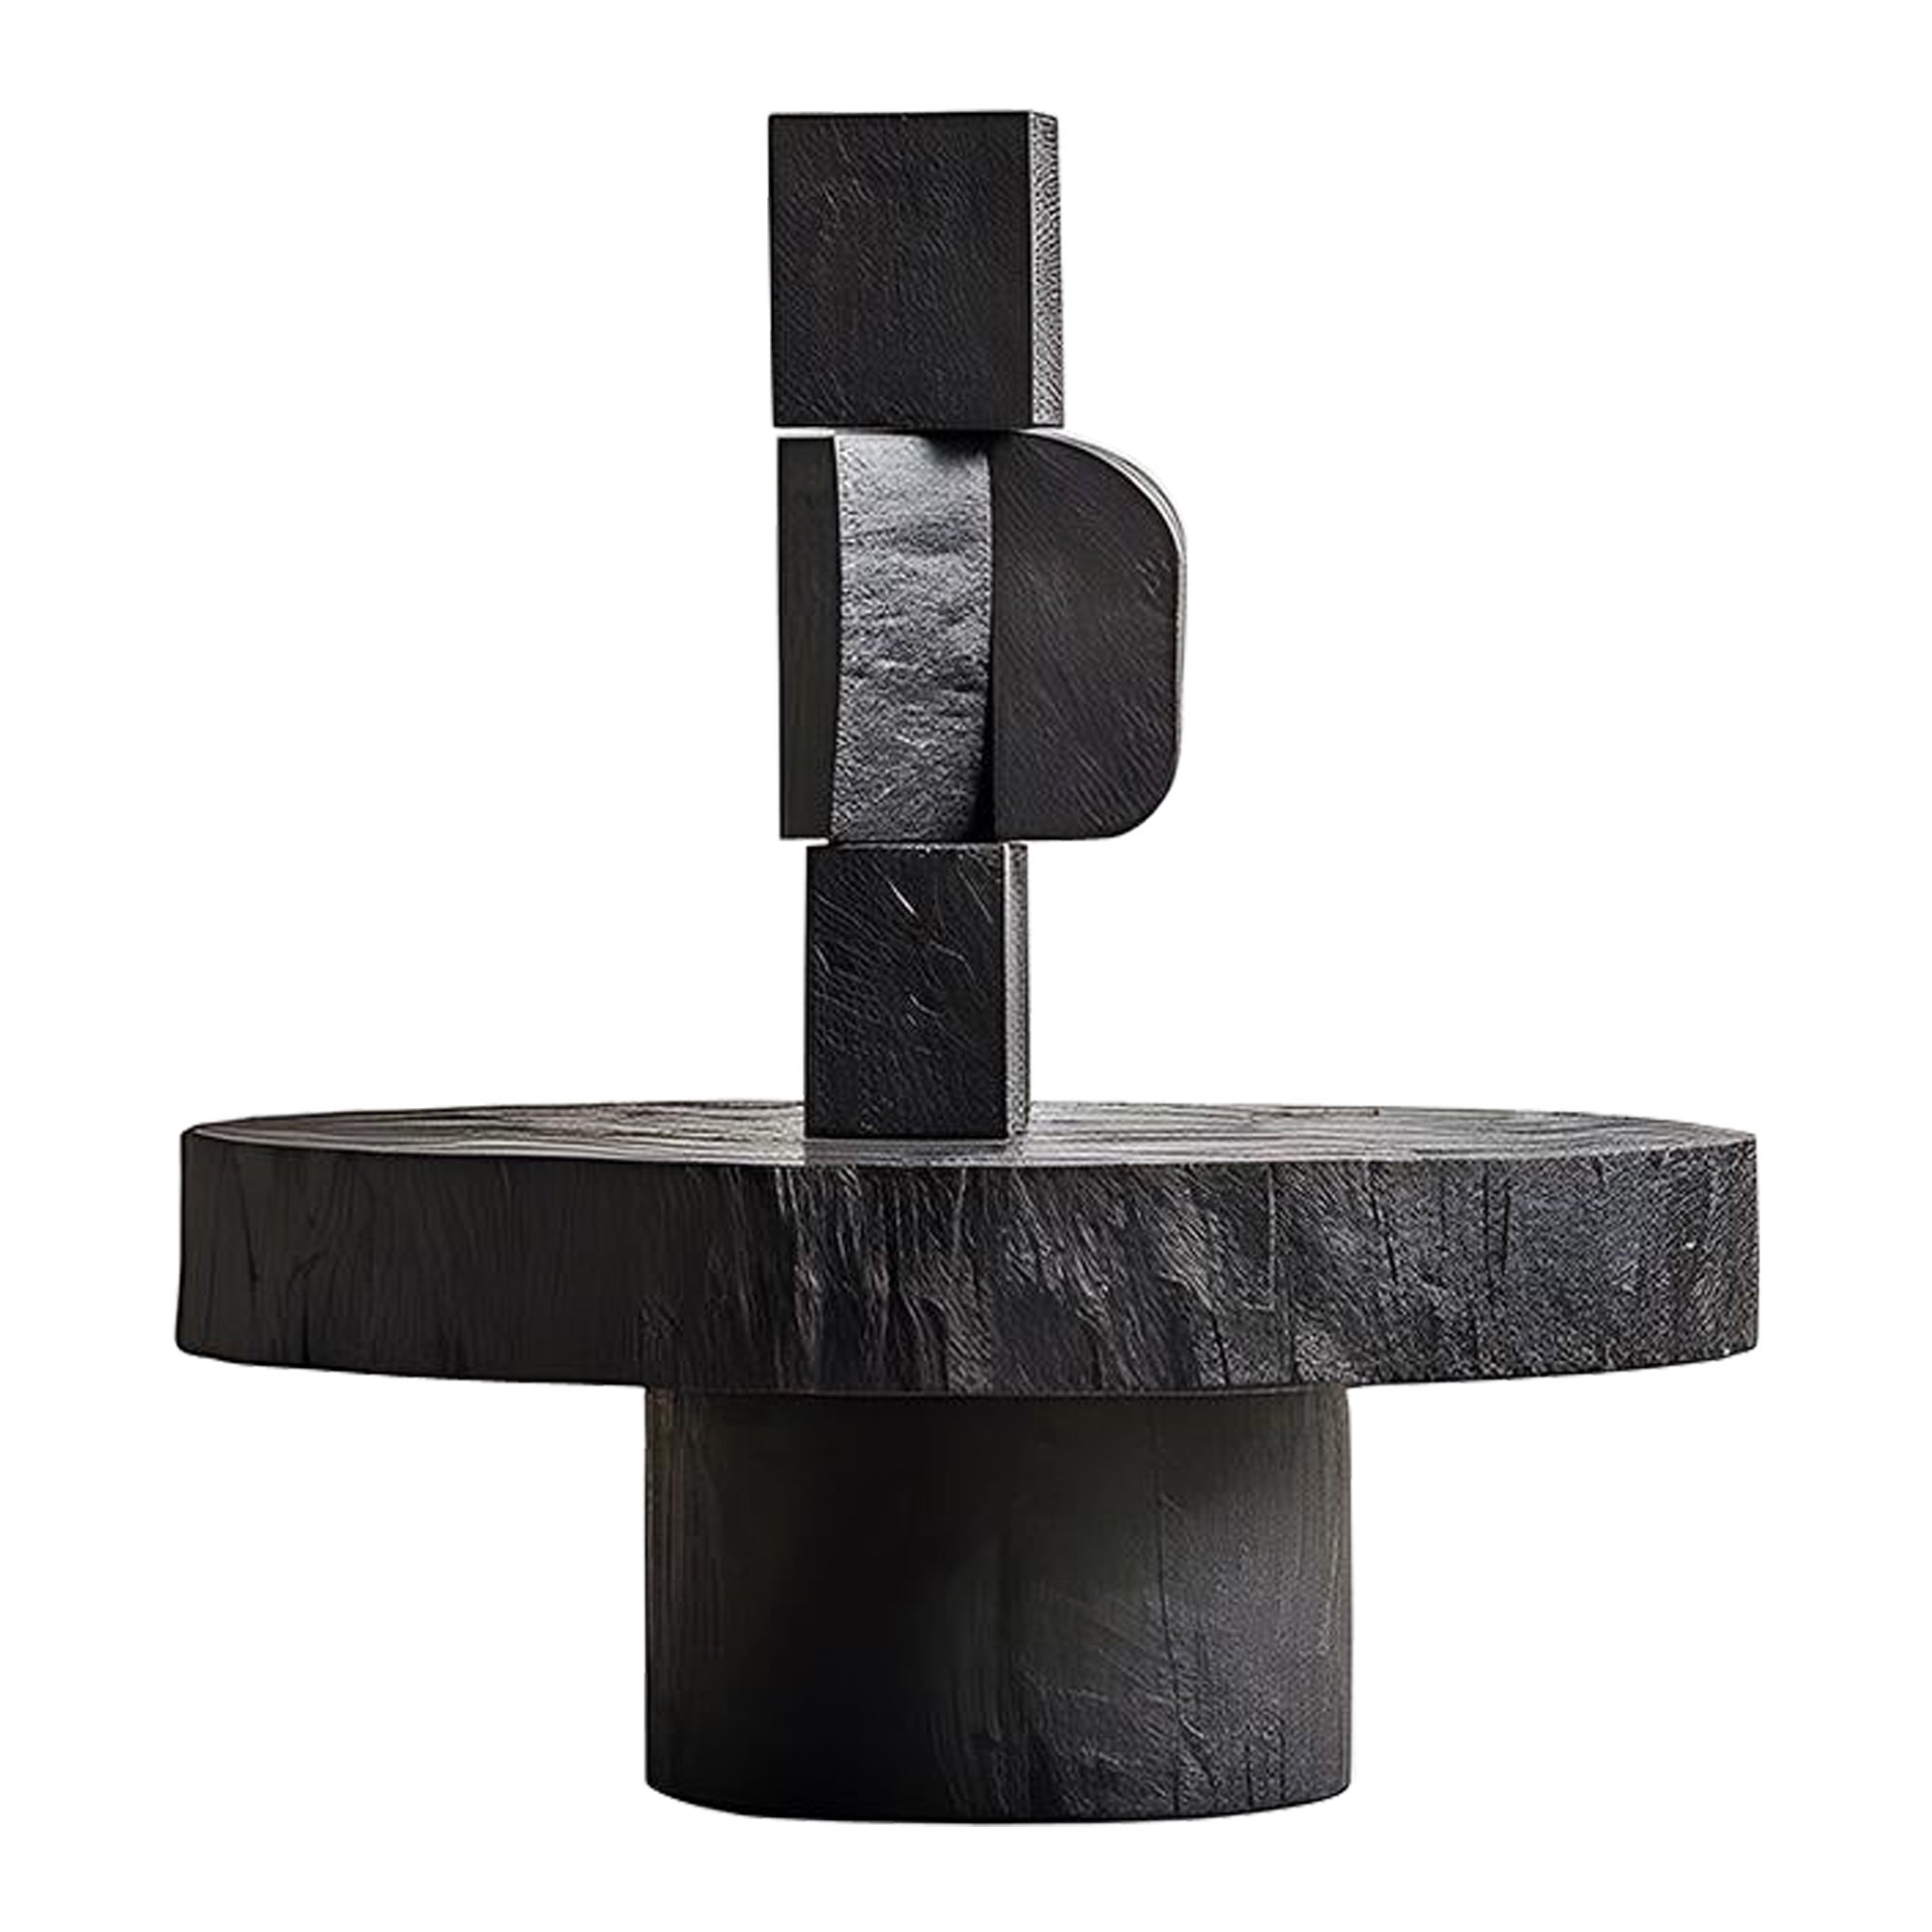 Unseen Force n° 3 de Joel Escalona, magistrale sculpture de table basse en chêne massif